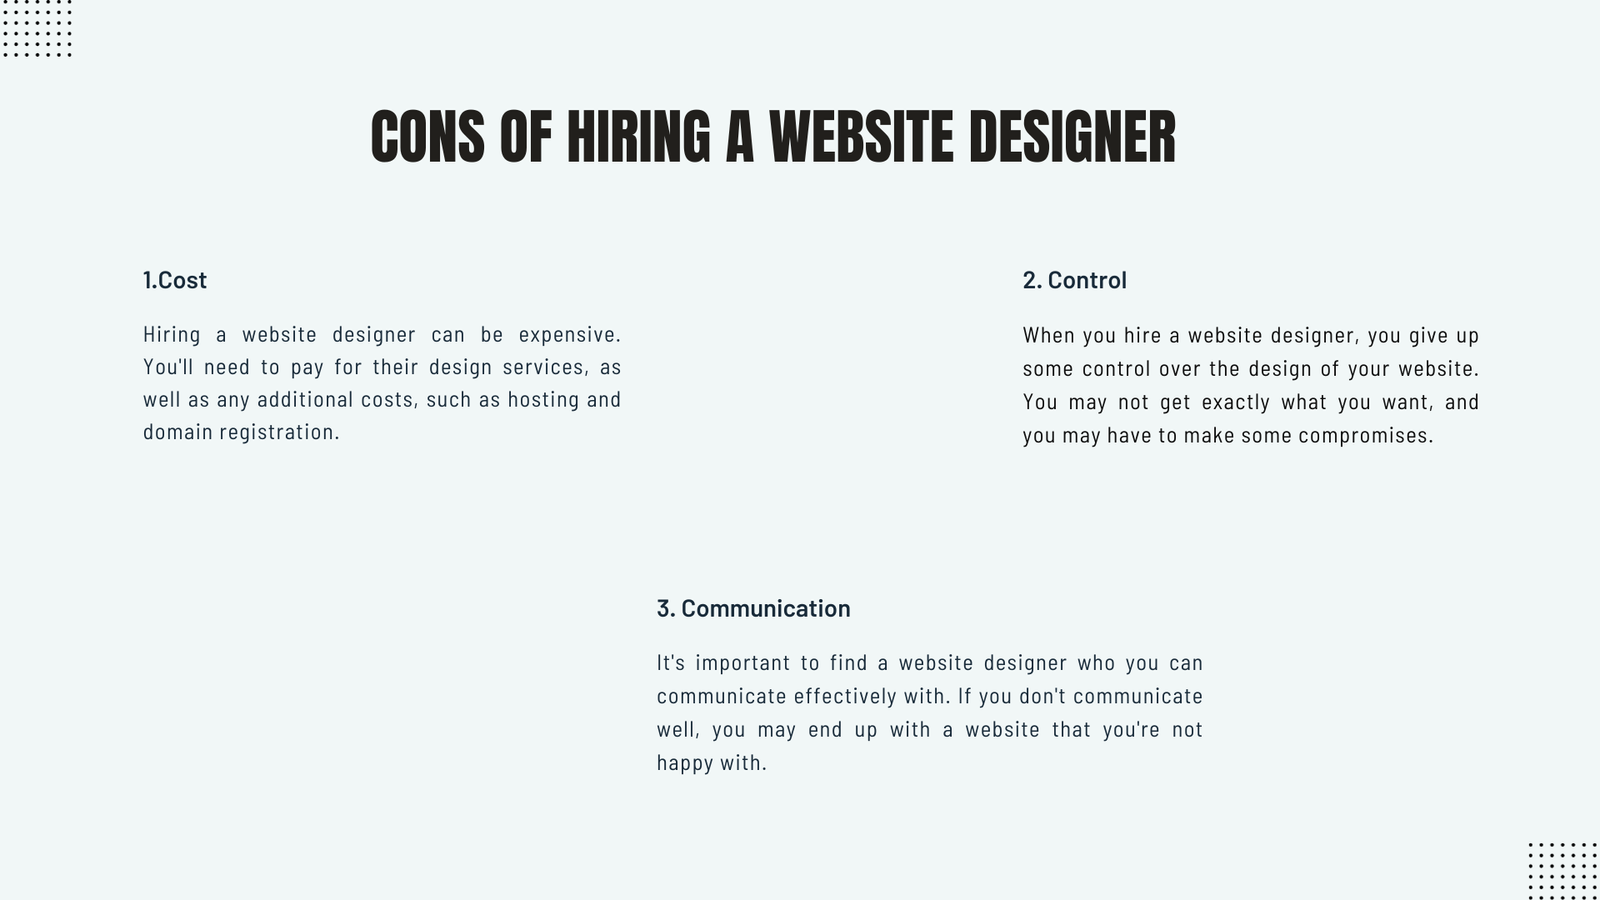 Cons of hiring a website designer